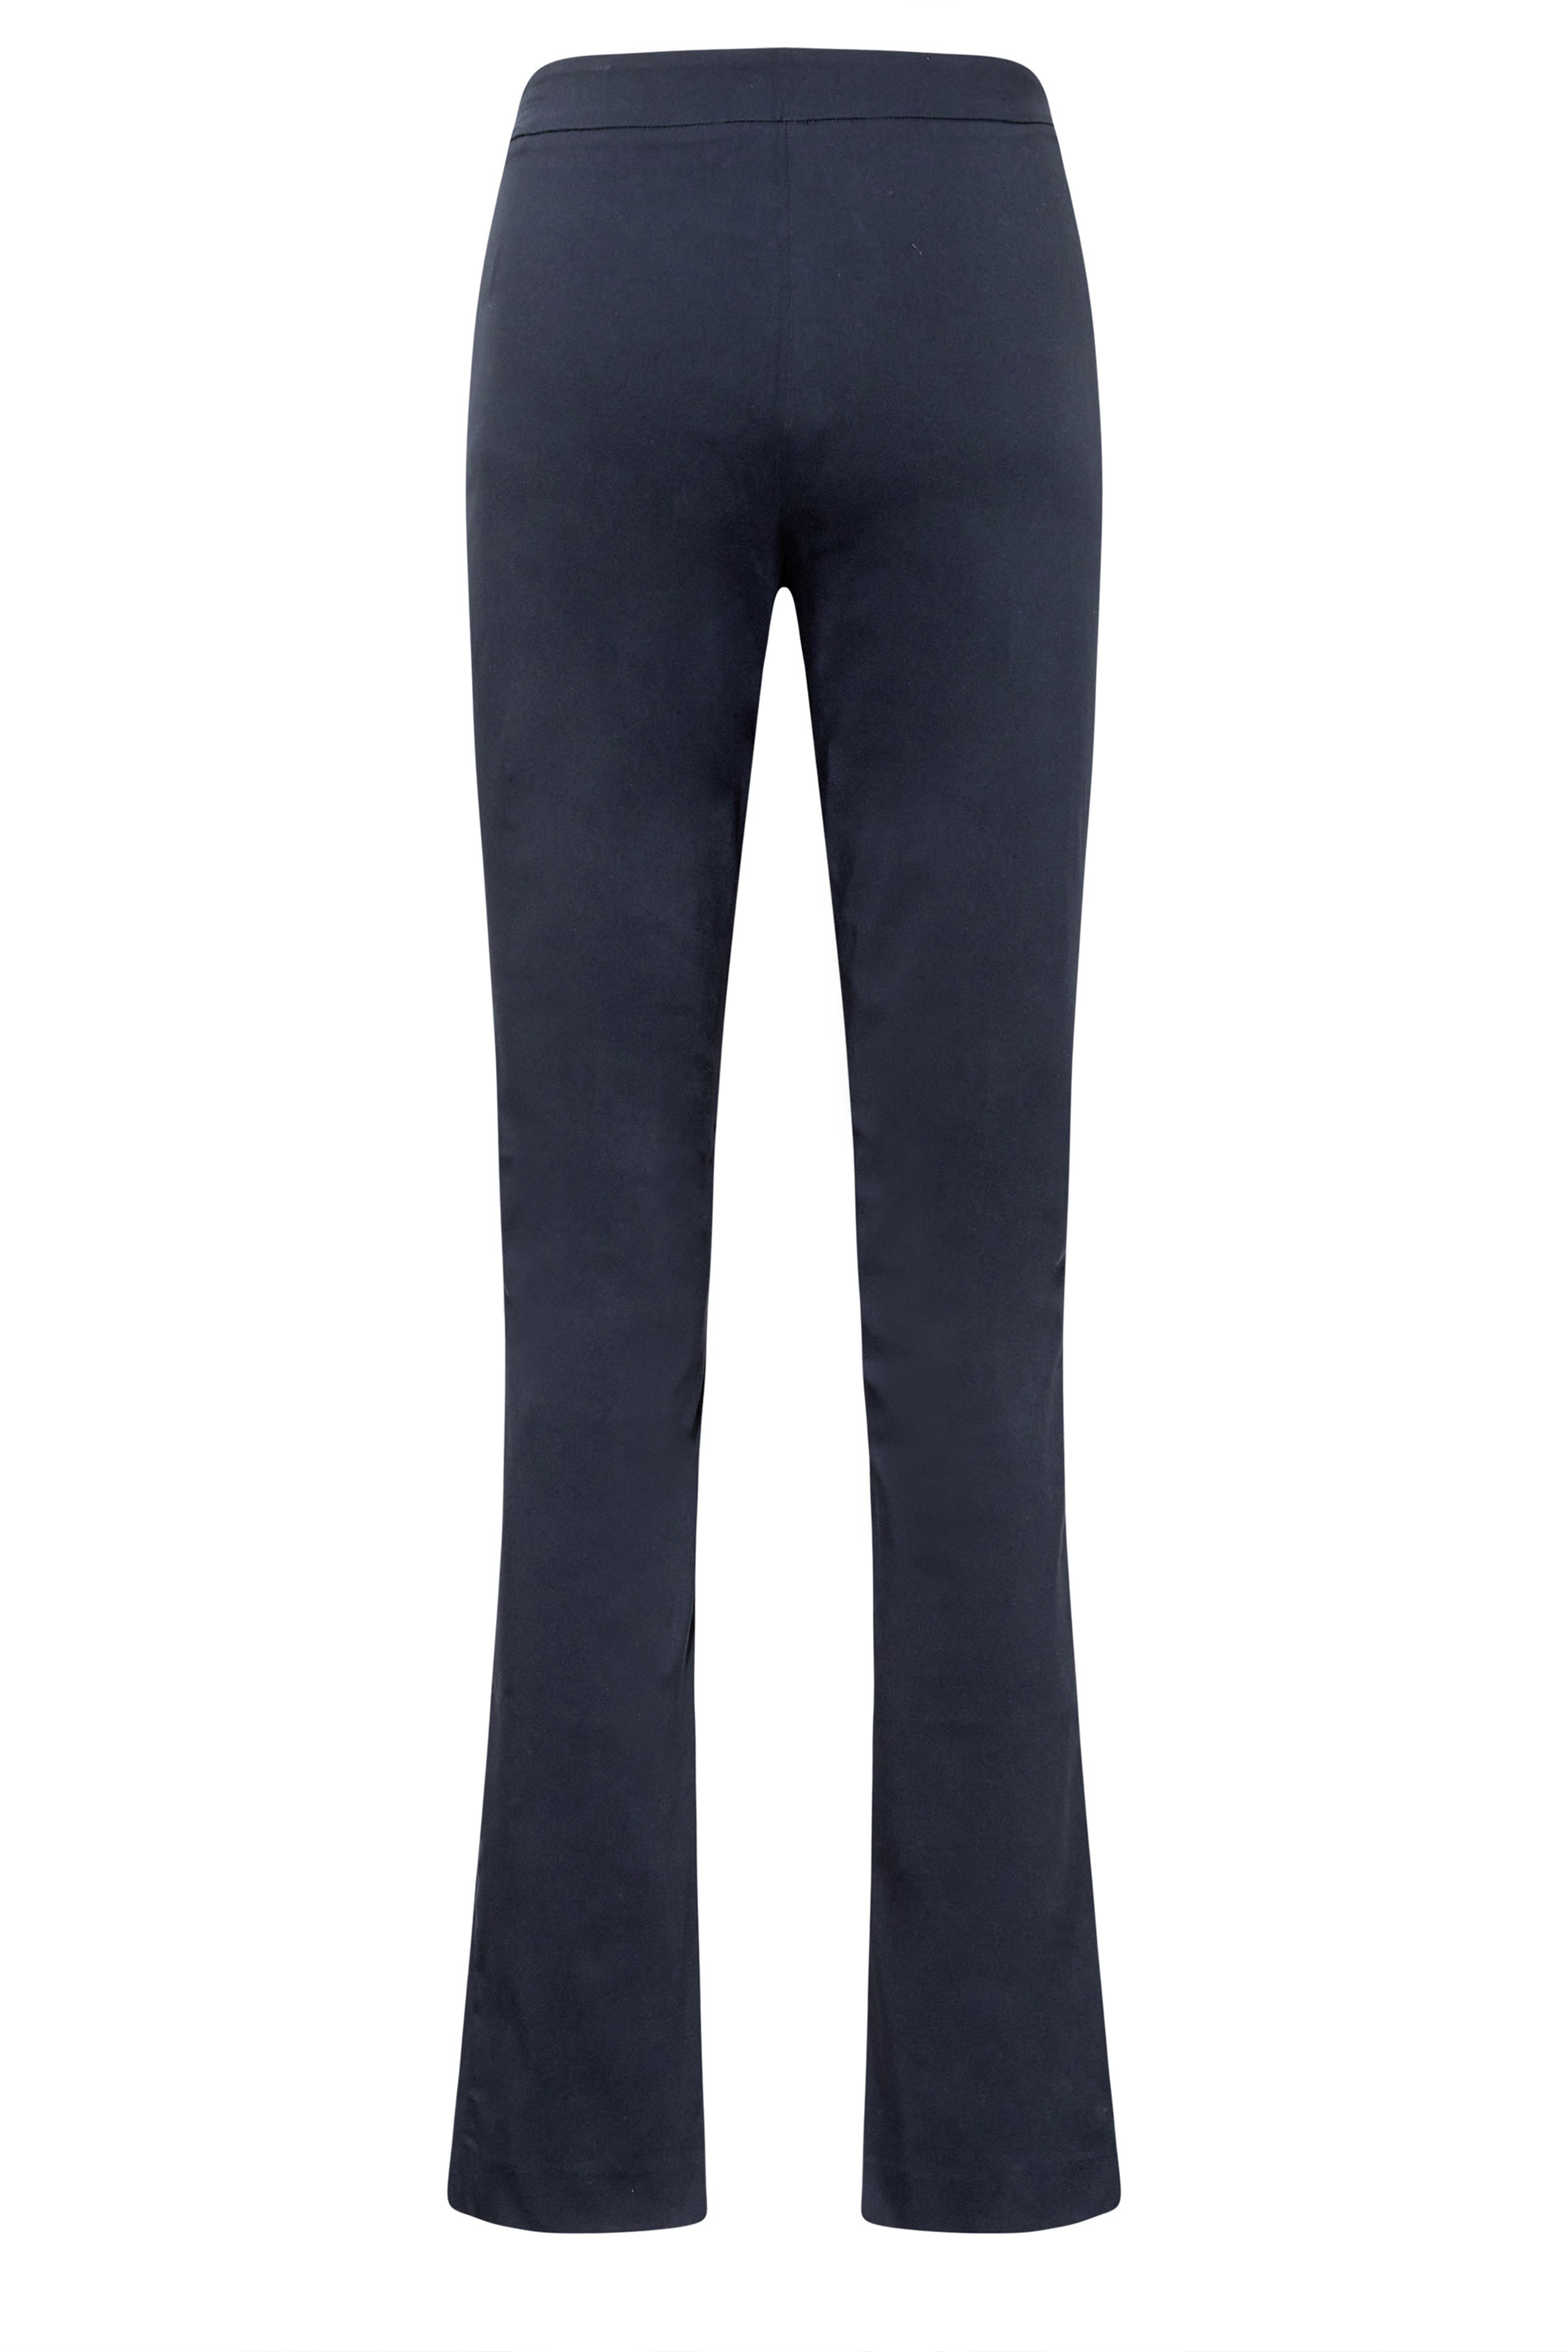 Long Tall Sally LEOPARD PRINT CROPPED - Trousers - black - Zalando.de